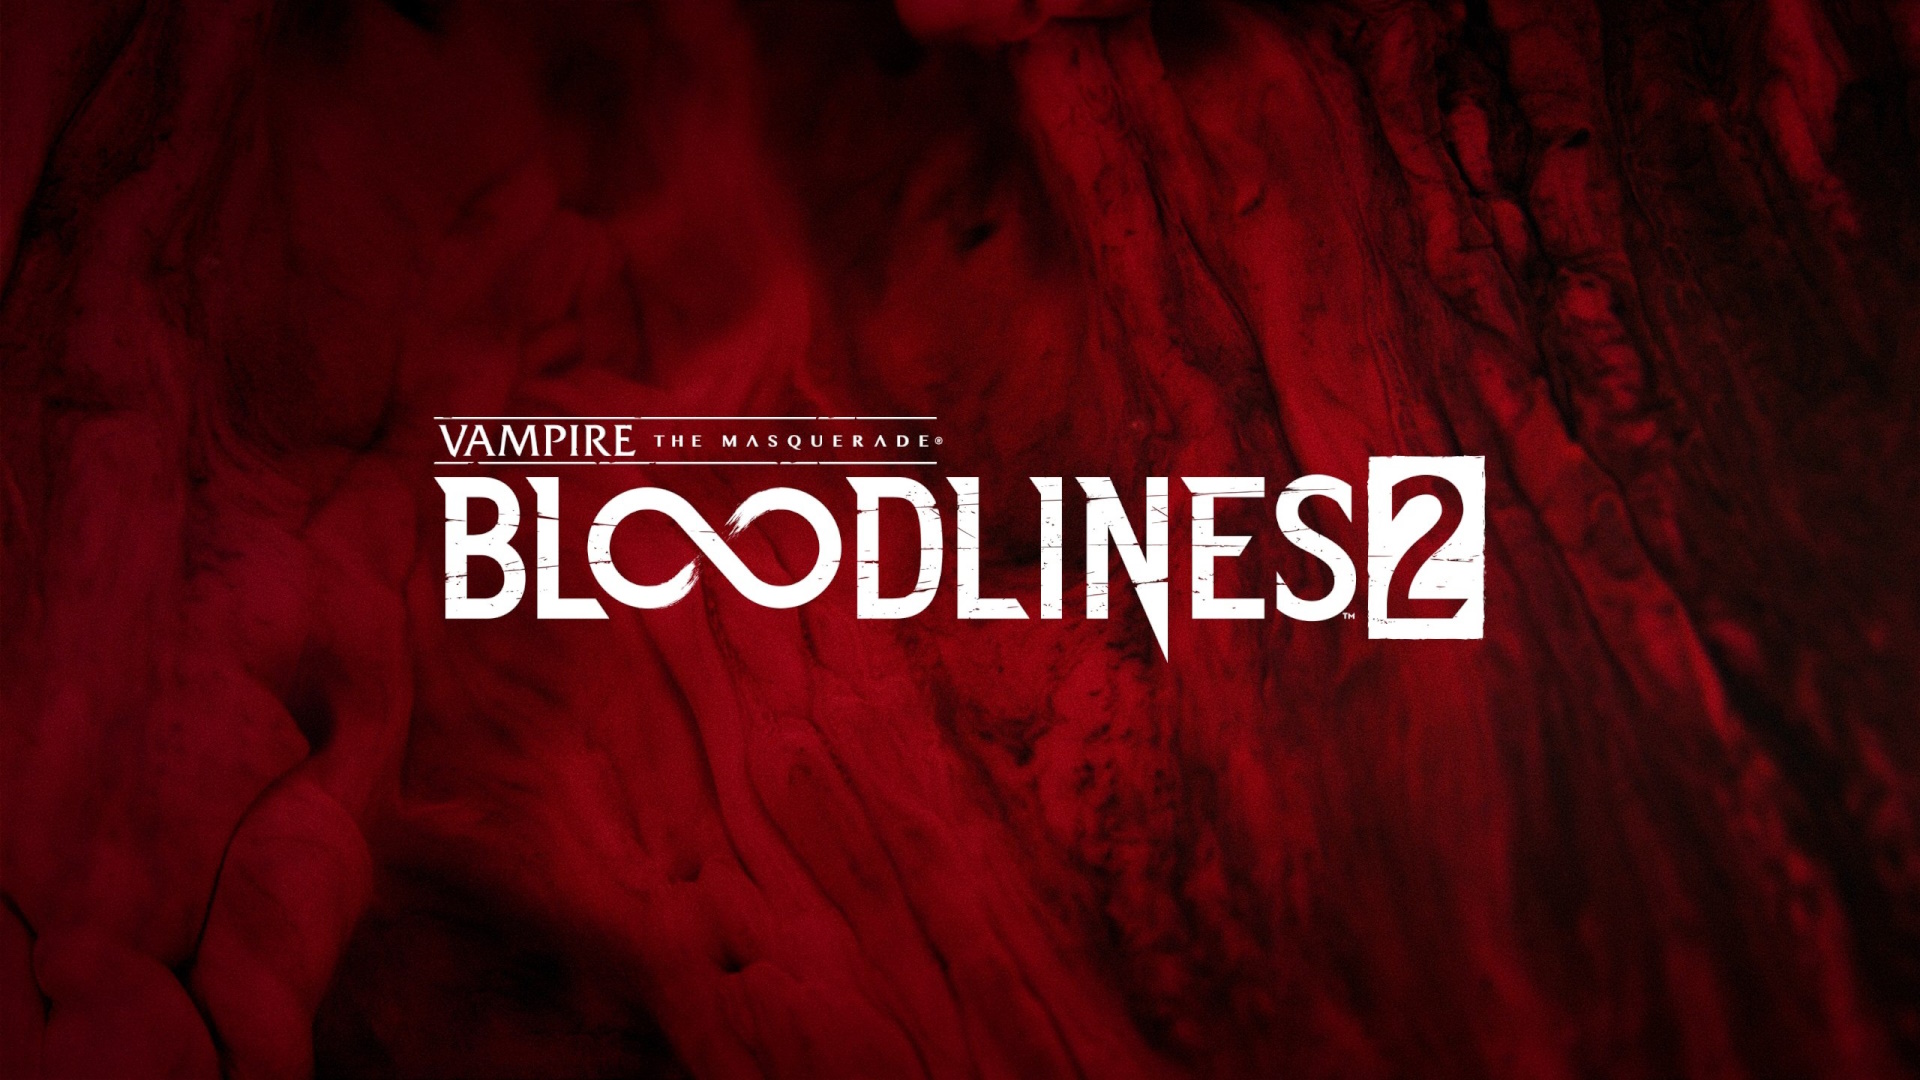 Vampire The Masquerade - Bloodlines 2